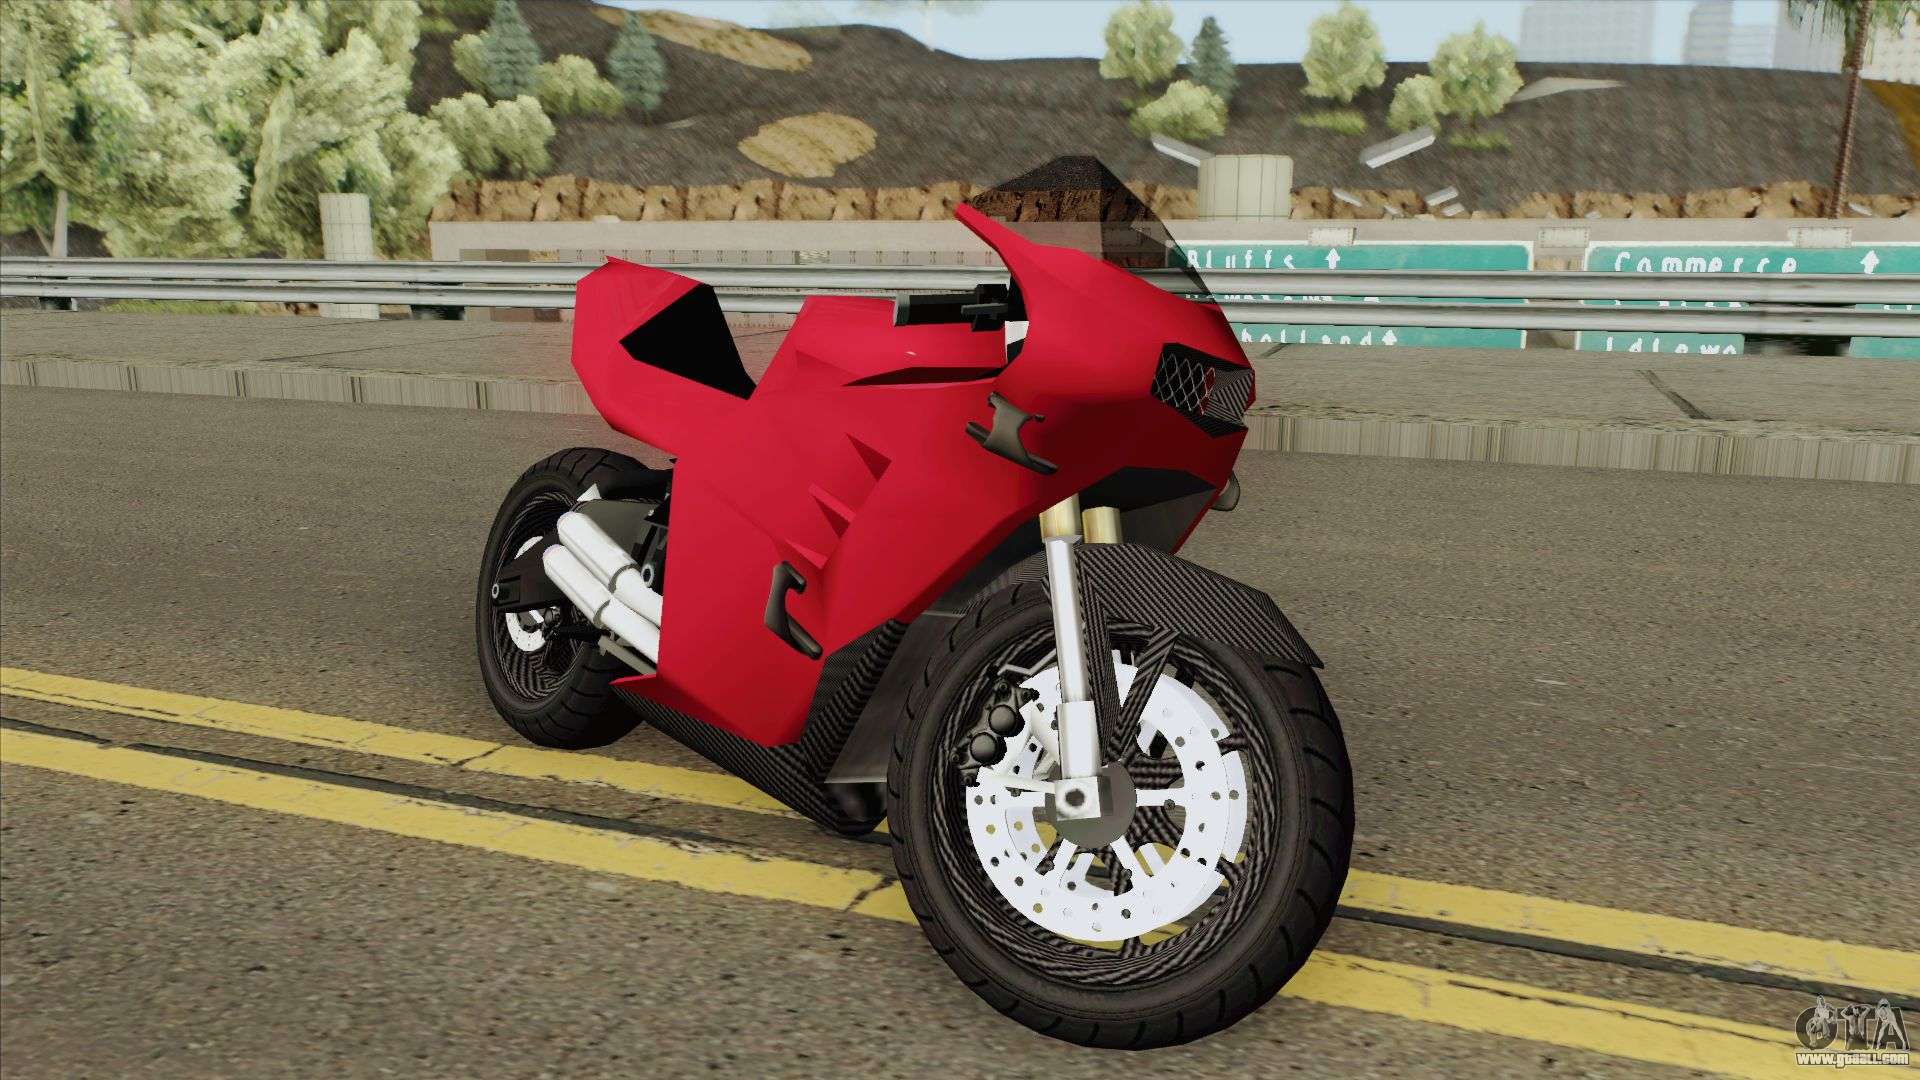 NRG500 (Ducati Style) for GTA San Andreas